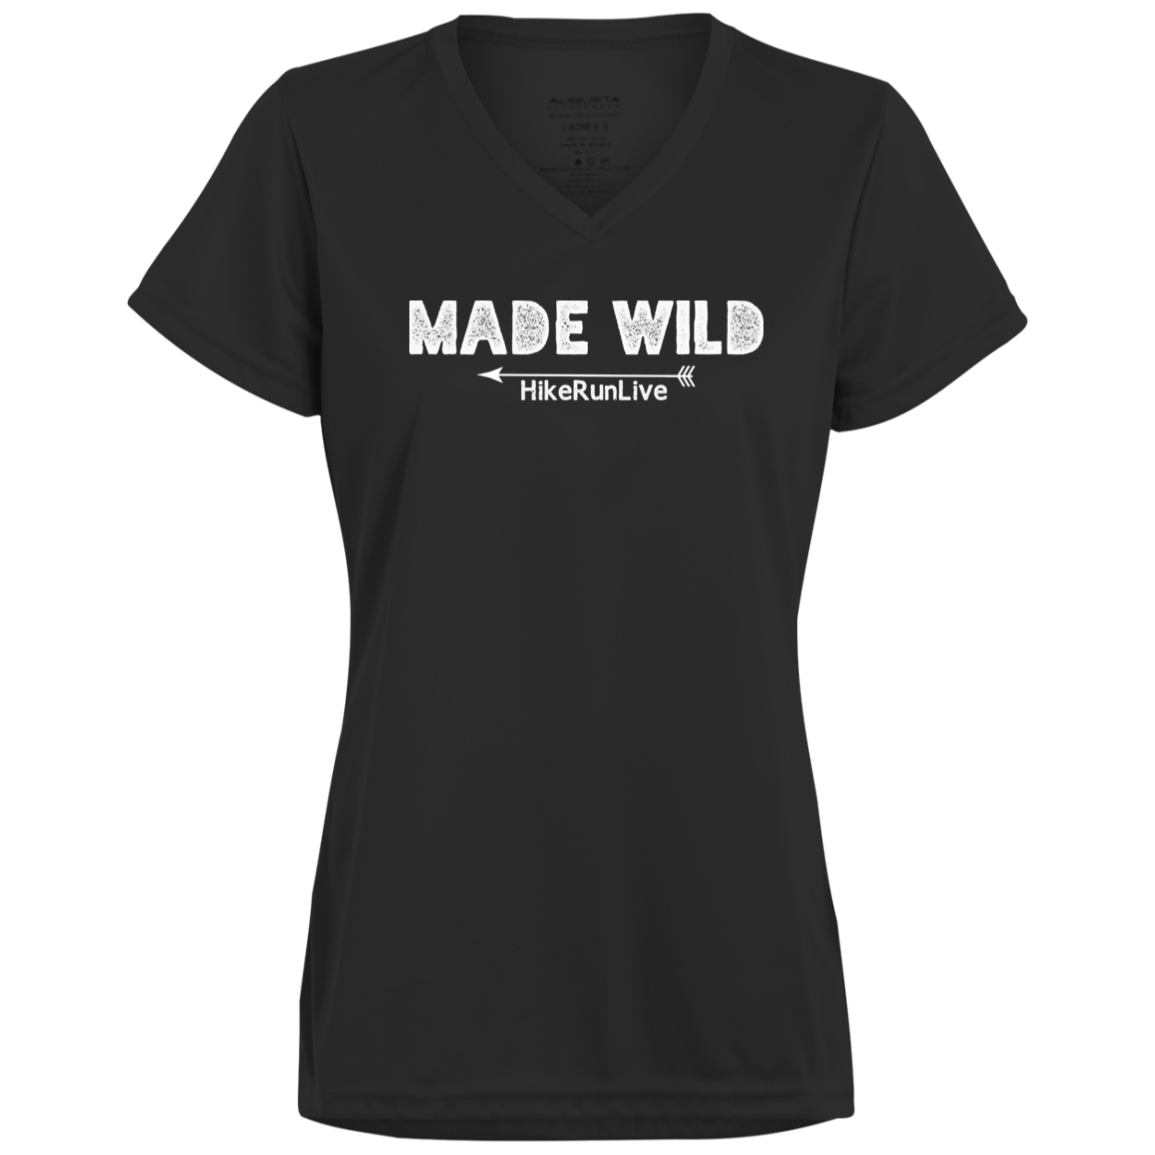 Made Wild - HikeRunLive  - Moisture Wicking T-Shirts/Hoodies